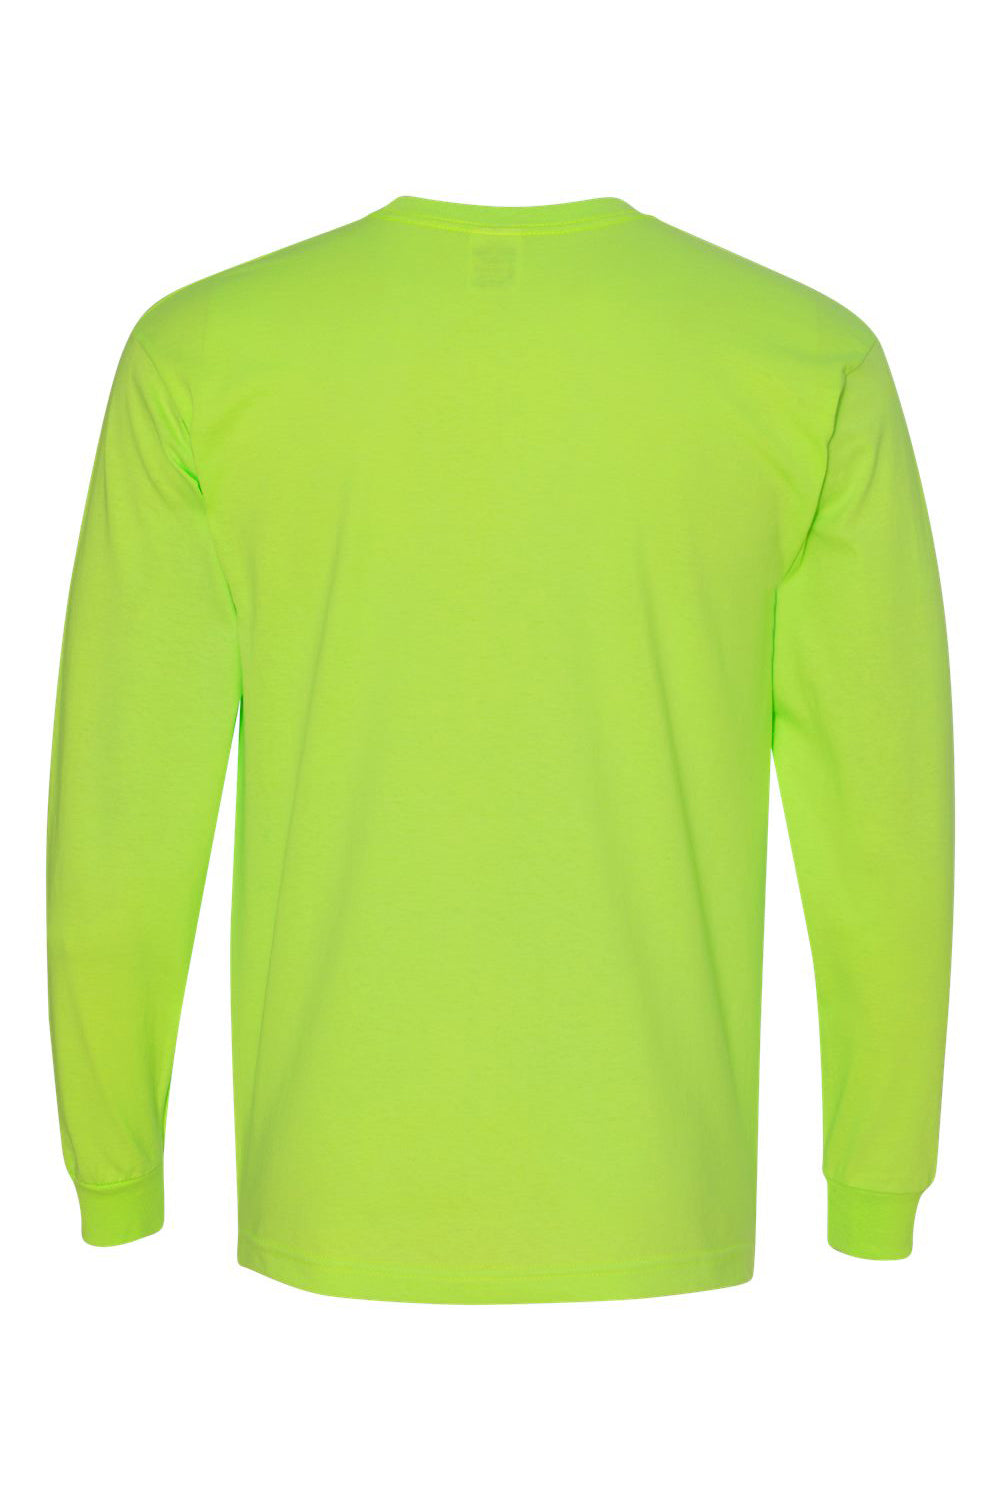 Bayside BA5060 Mens USA Made Long Sleeve Crewneck T-Shirt Lime Green Flat Back